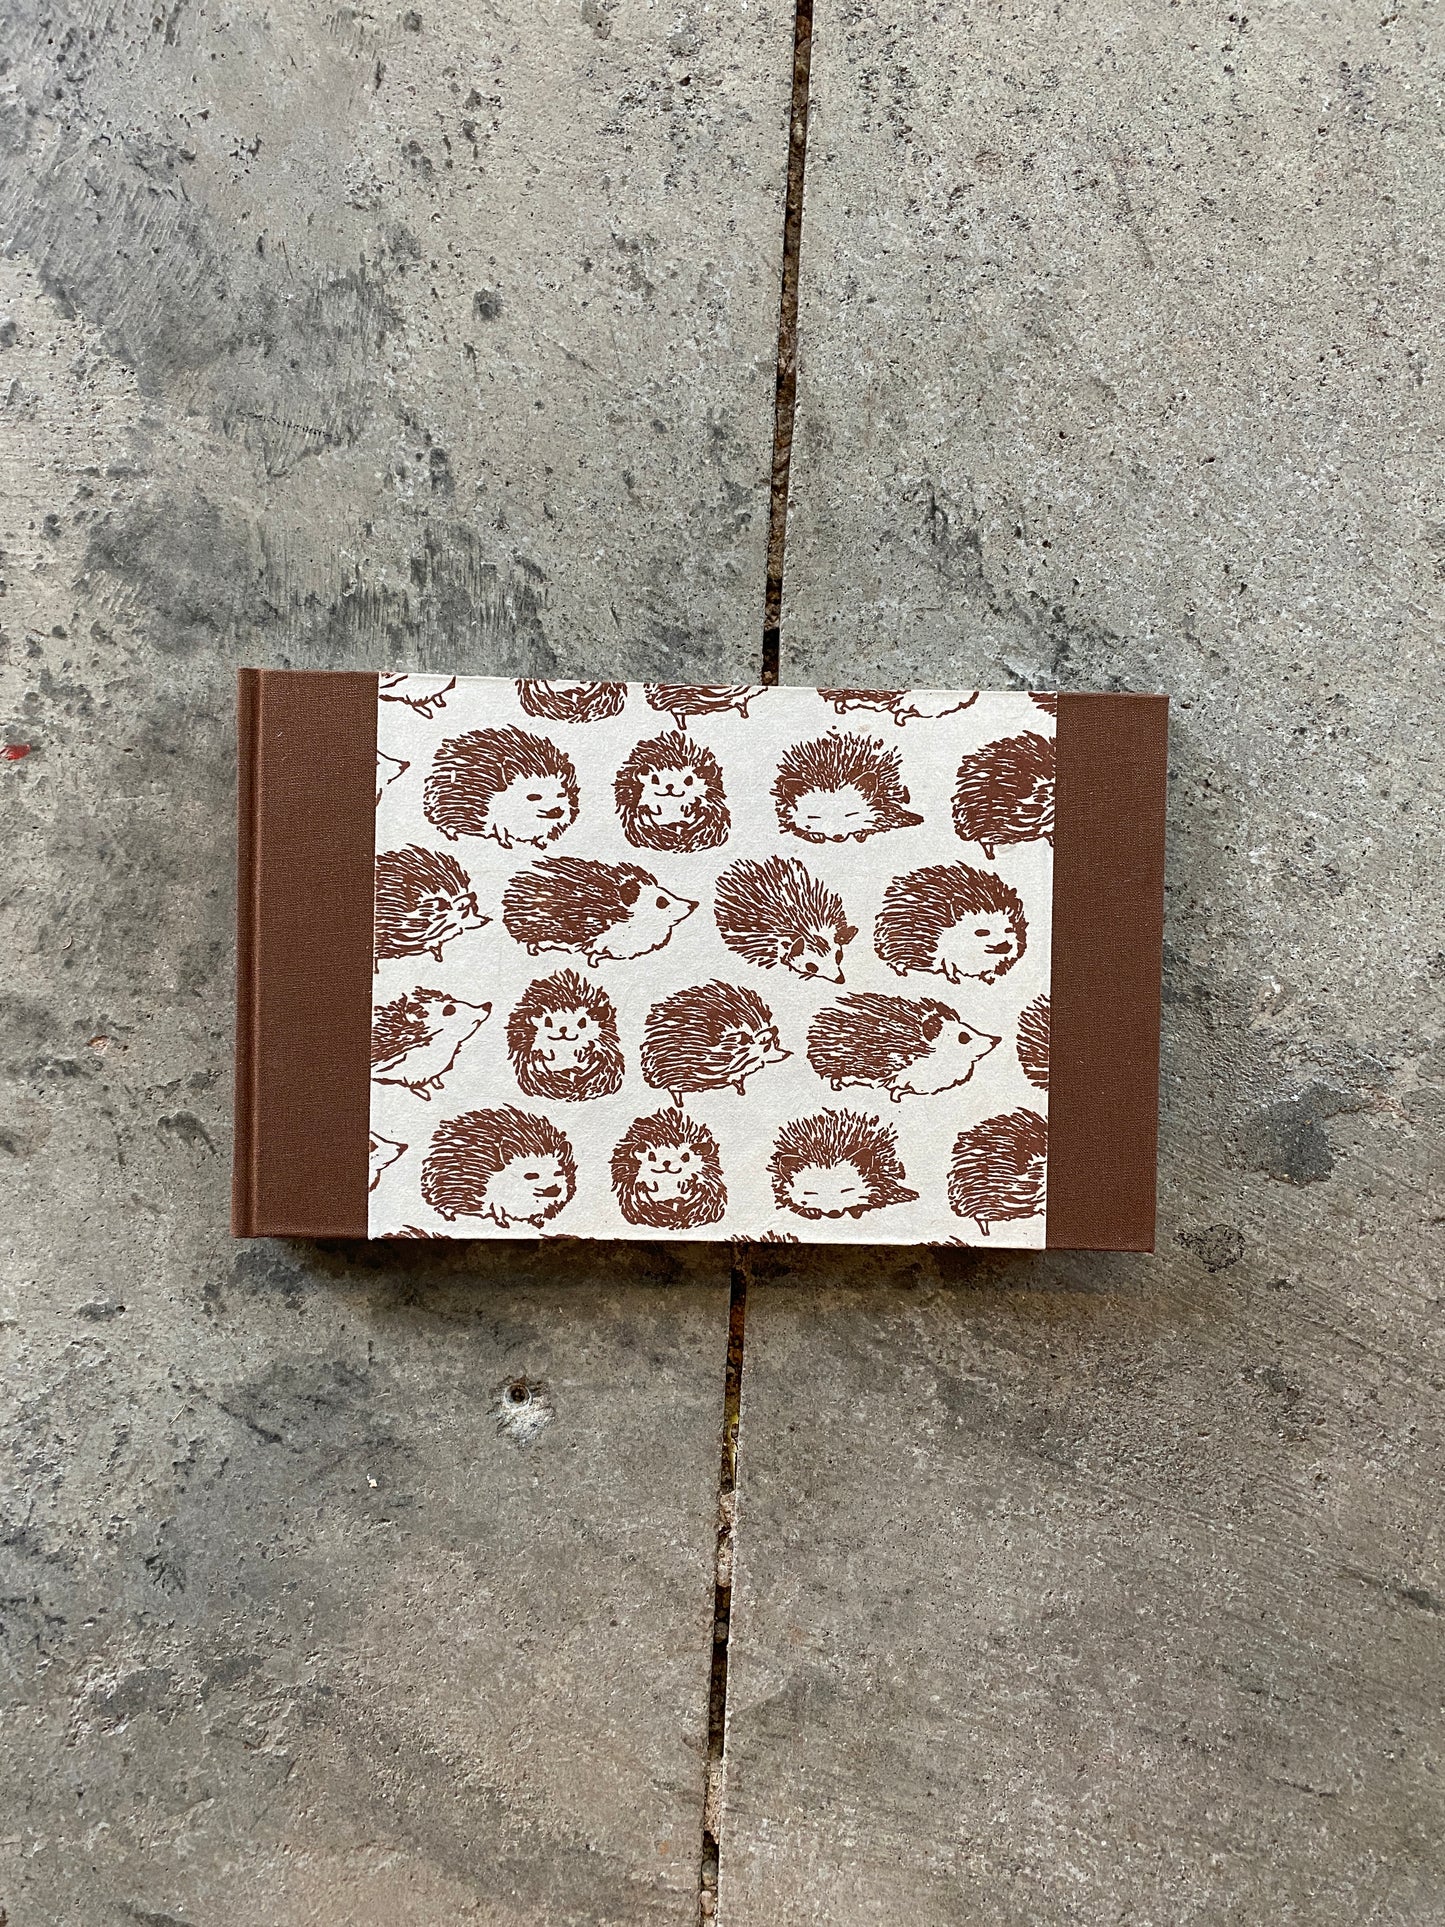 Scrapbook/Photo Album with Hedgehogs